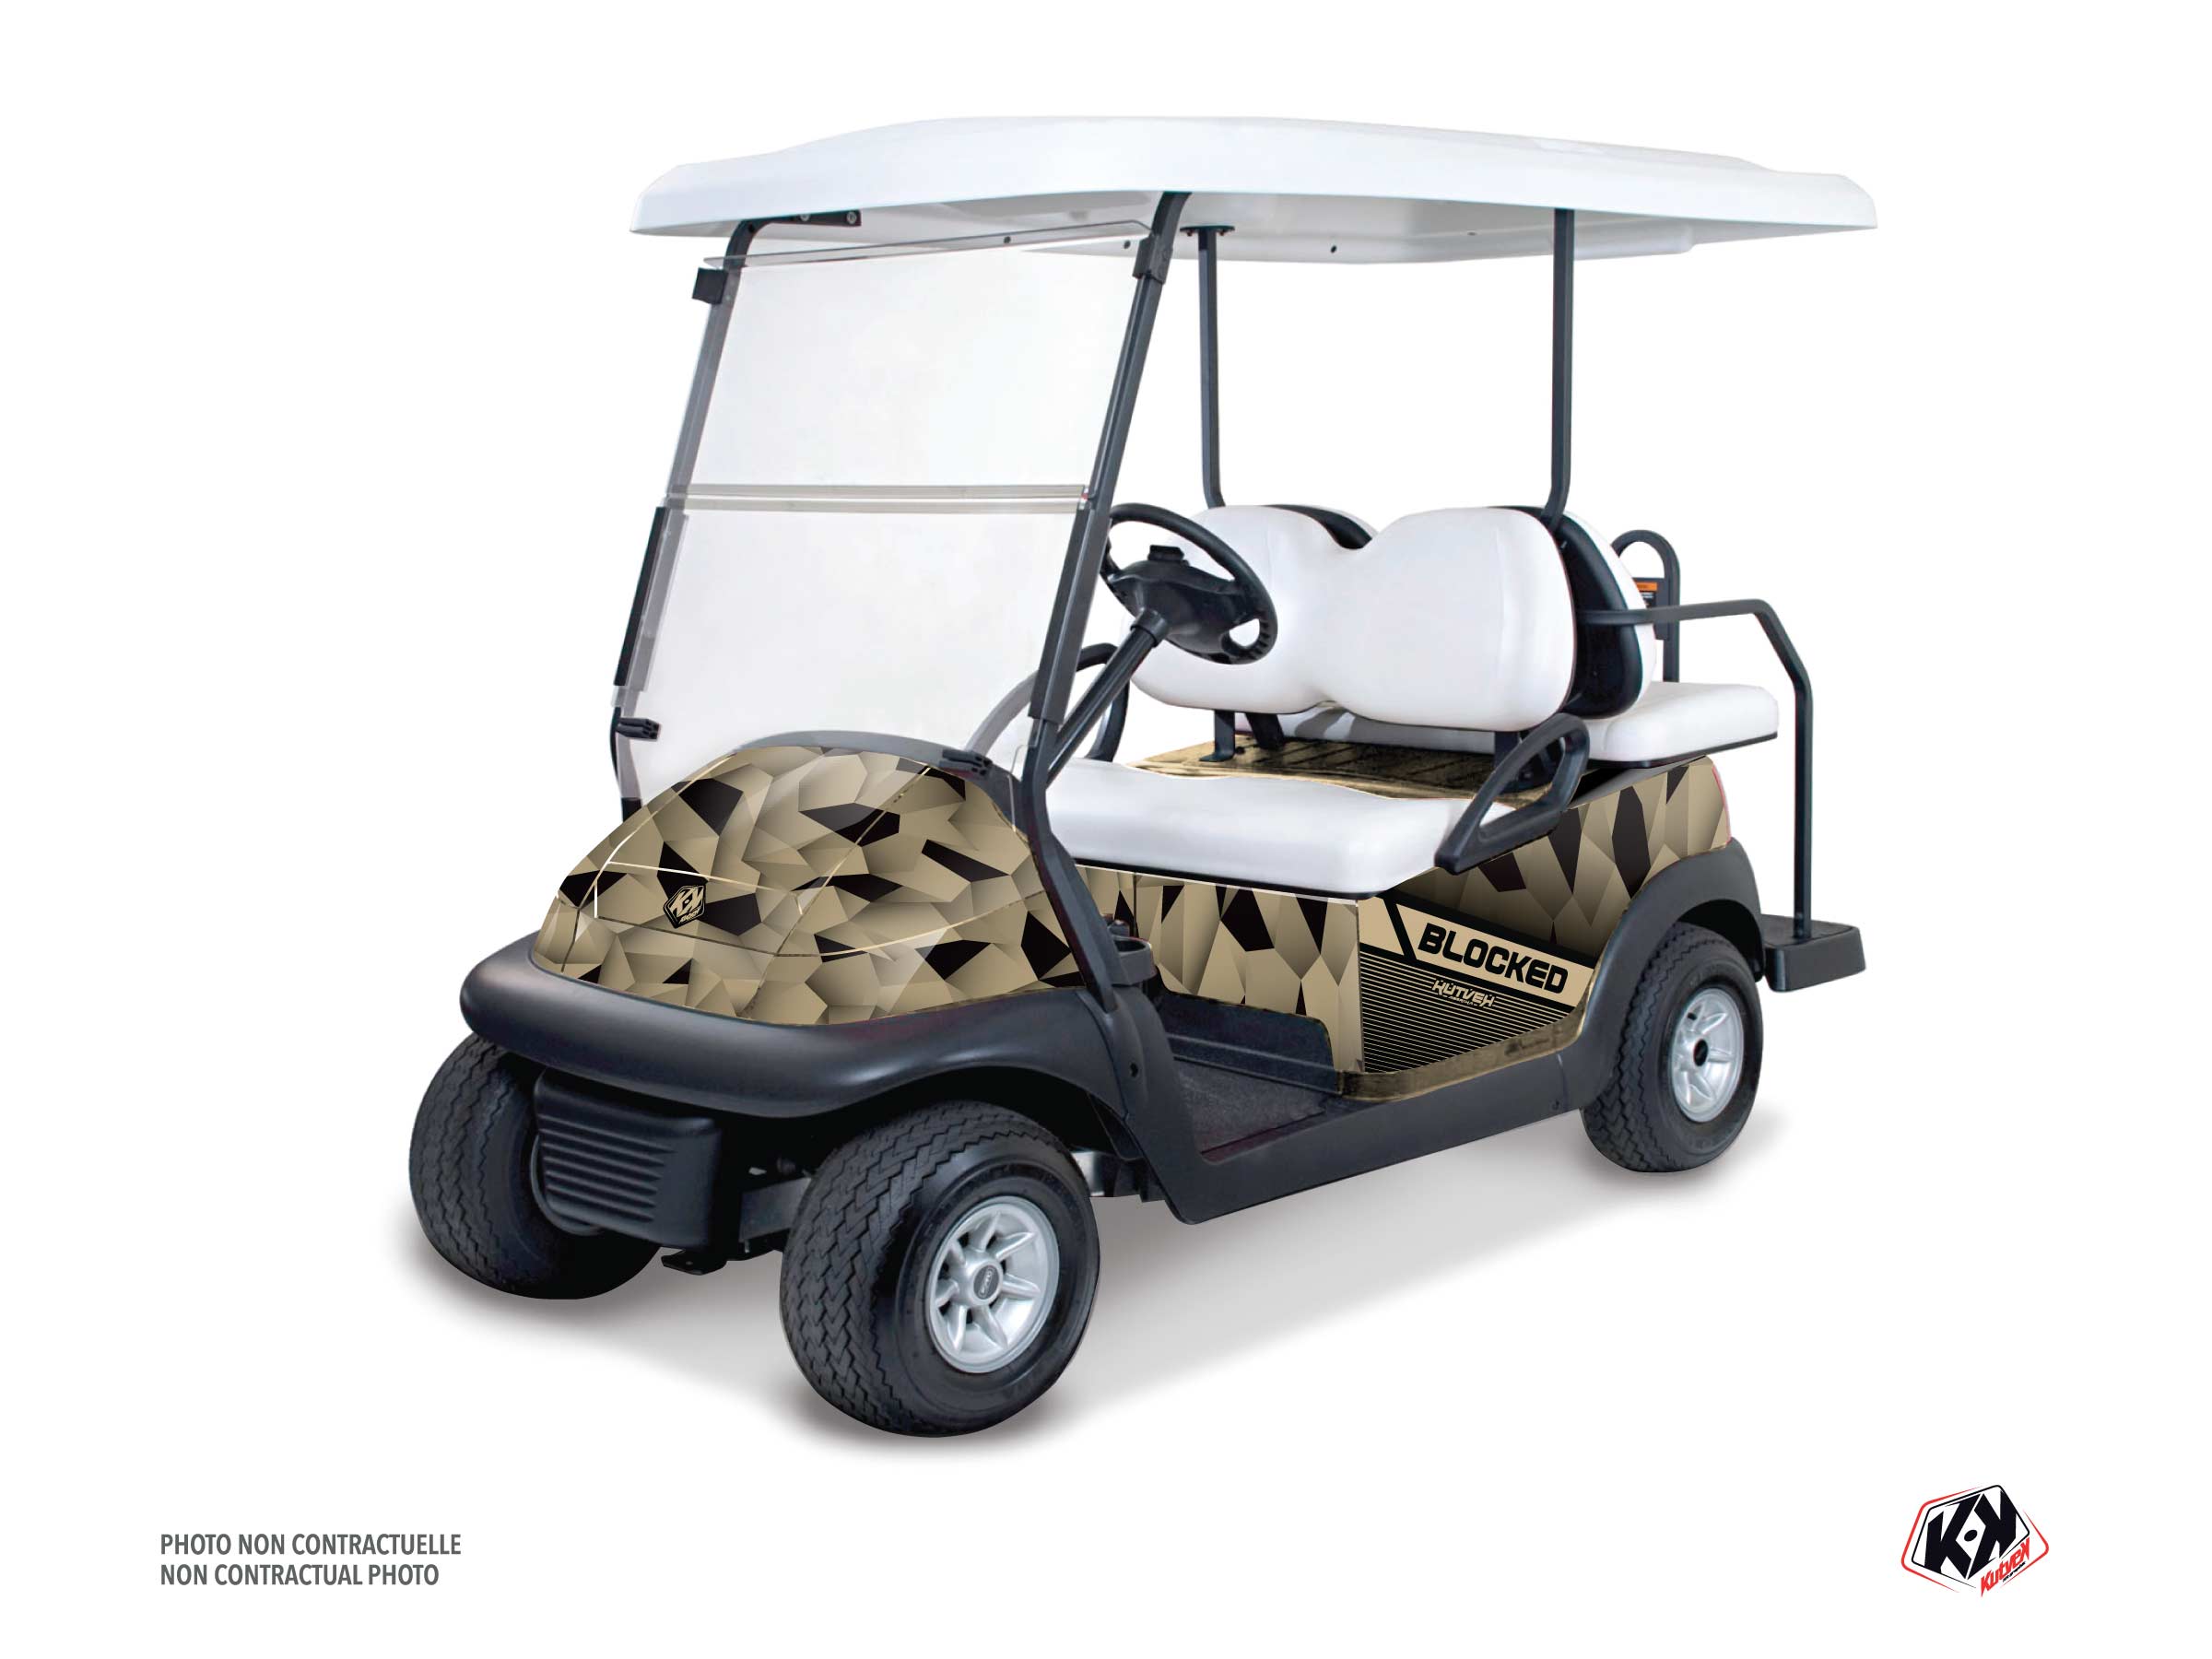 kit déco golf cart club car blocked série